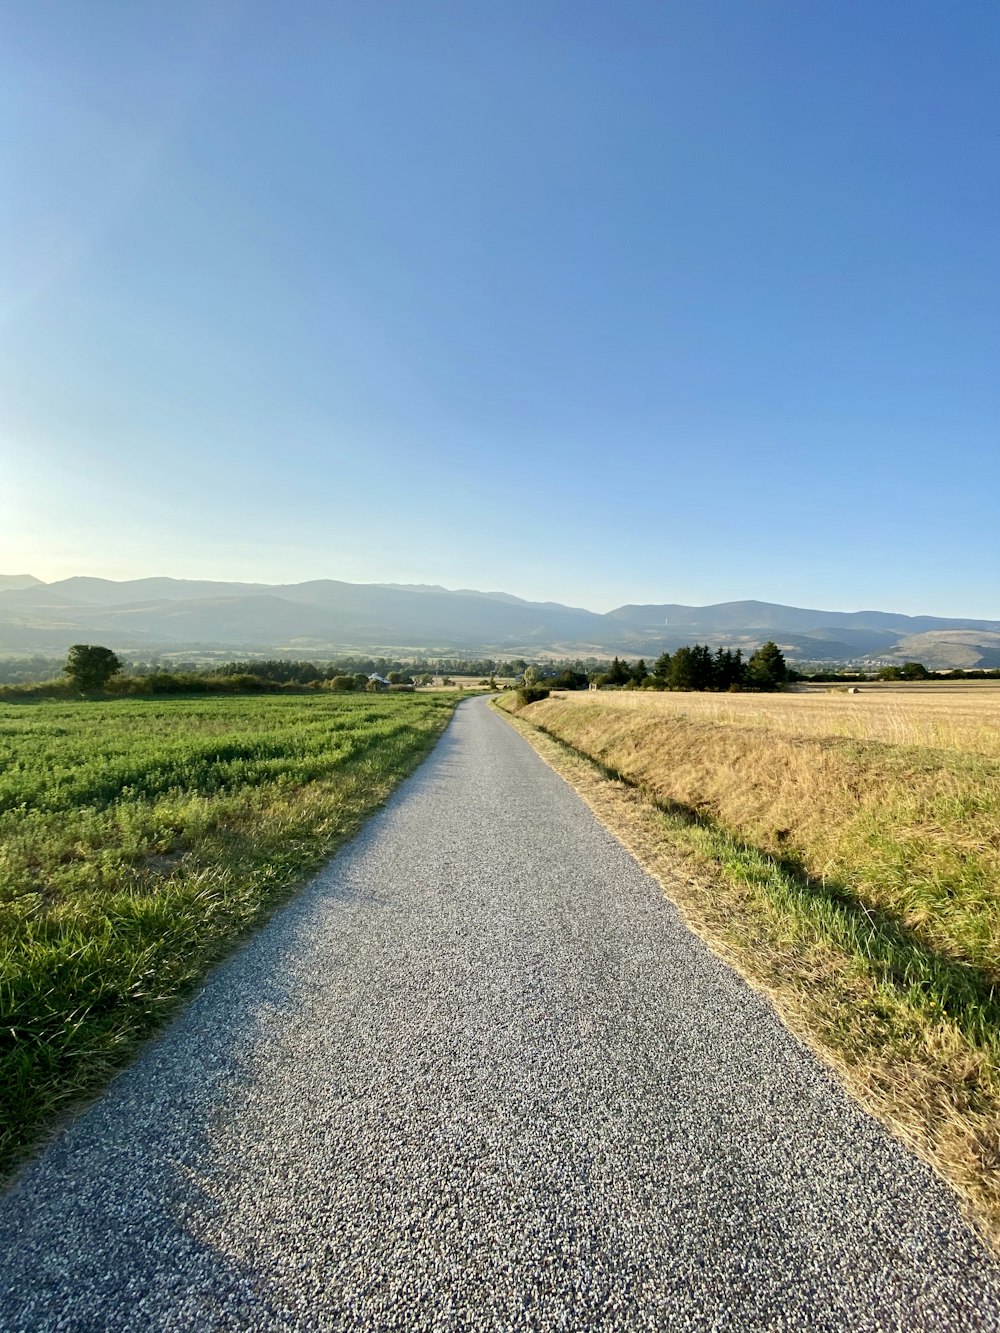 gray asphalt road between green grass field under blue sky during daytime